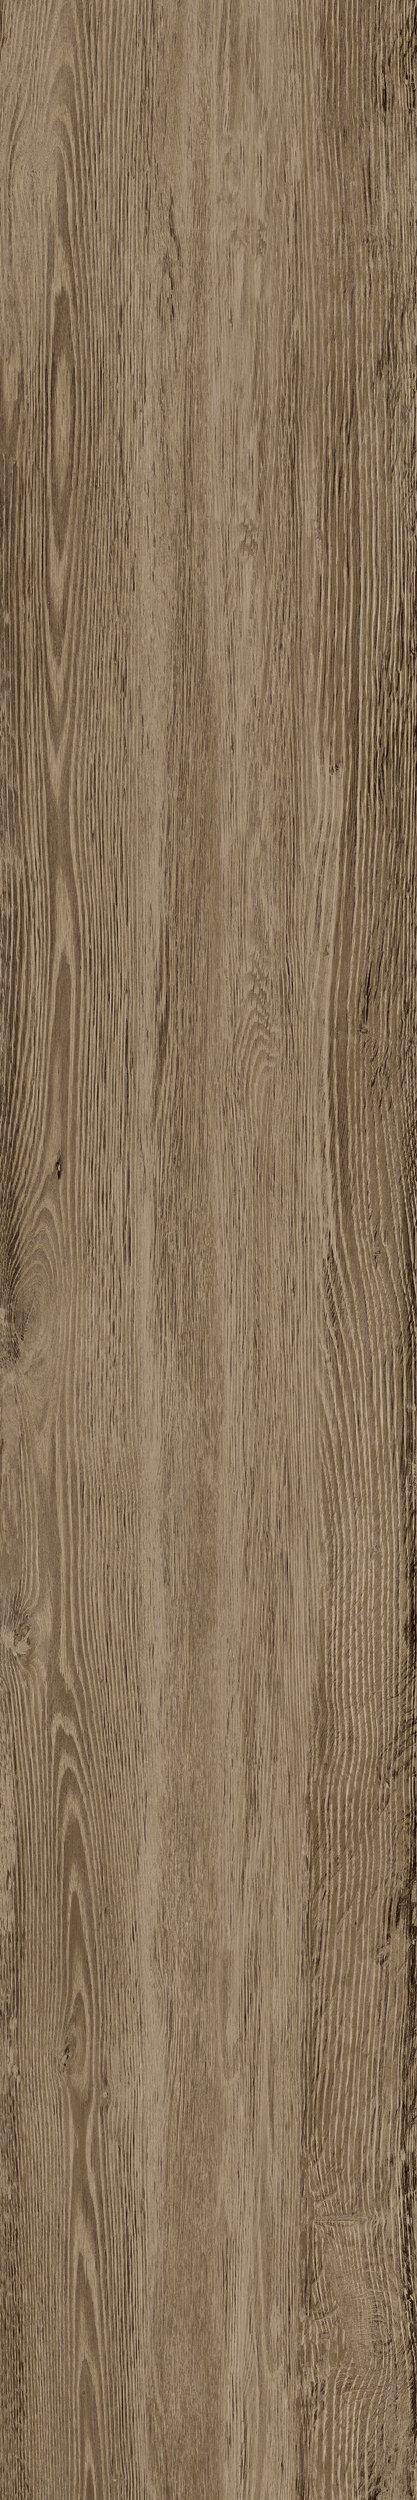 Fliese Eiche-Holzoptik braun 30x180 cm Großformat "Sunwood Walnut" rektifiziert